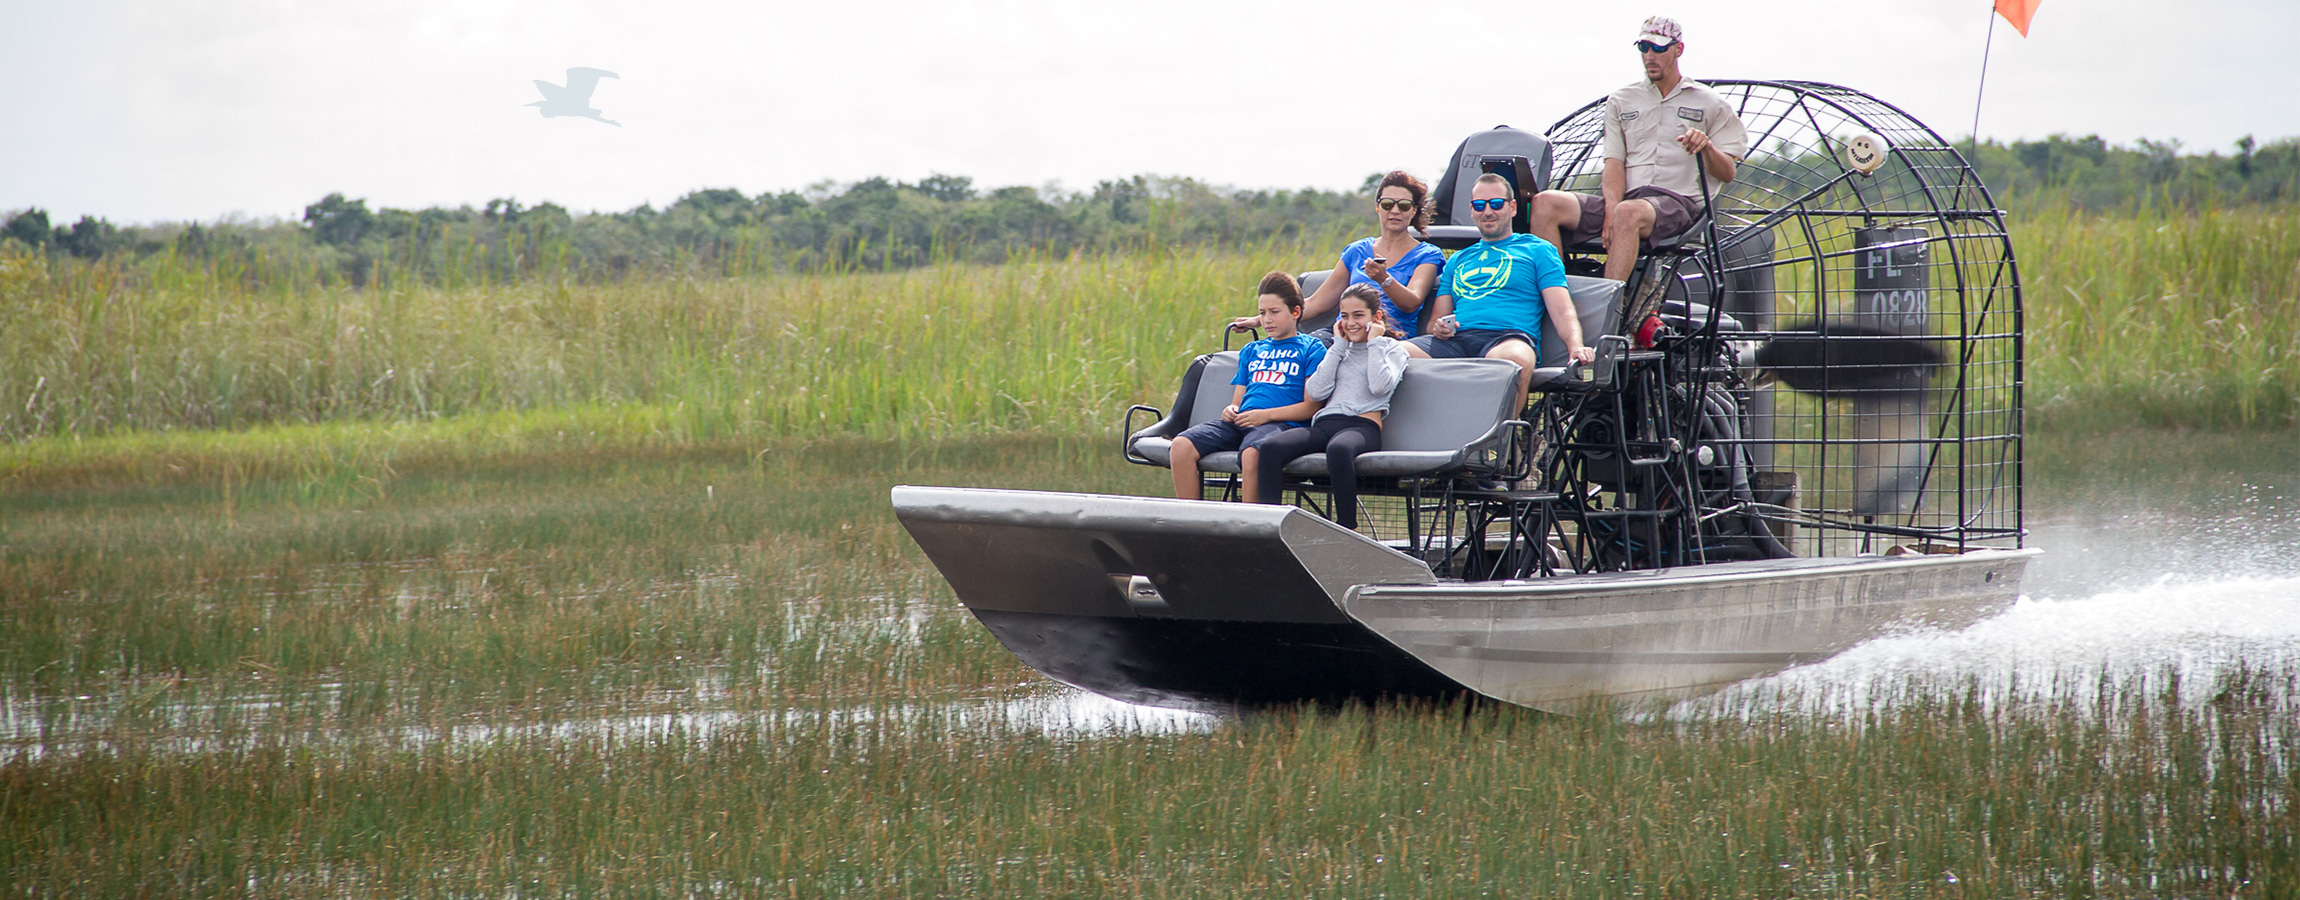 Florida Airboat Rides At Gator Park Everglades Airboat Tours